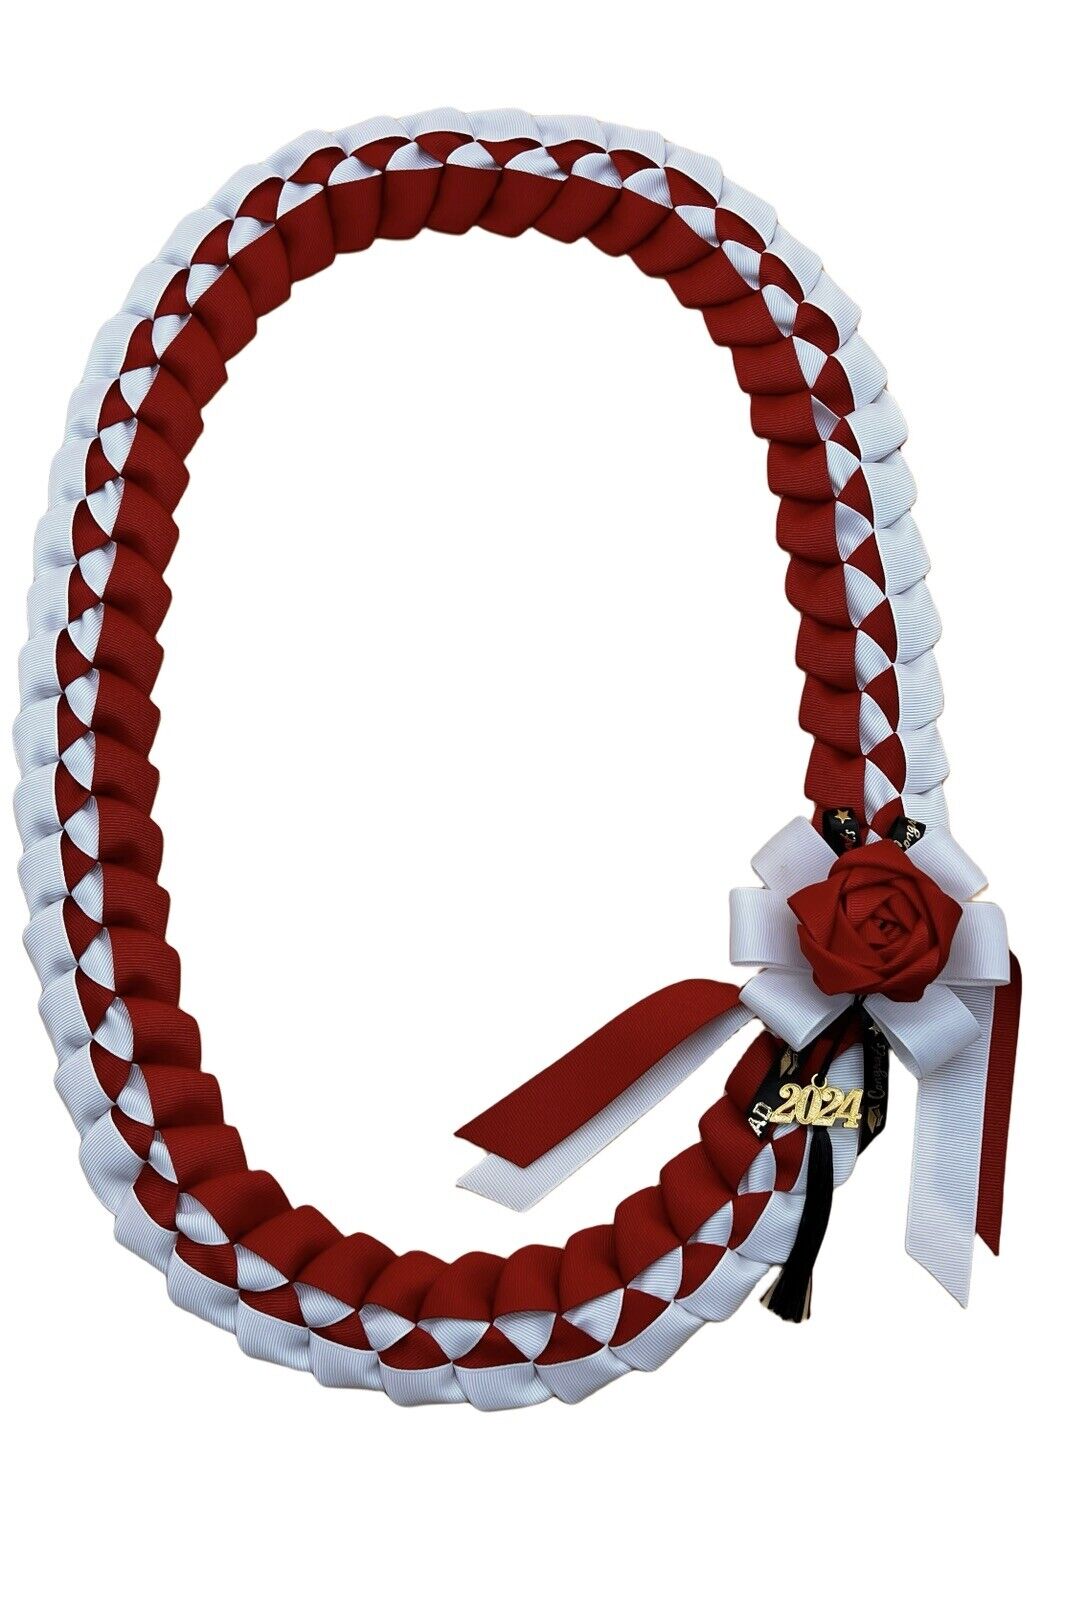 Grosgrain Ribbon Graduation Leis ，Red & White School Colors 